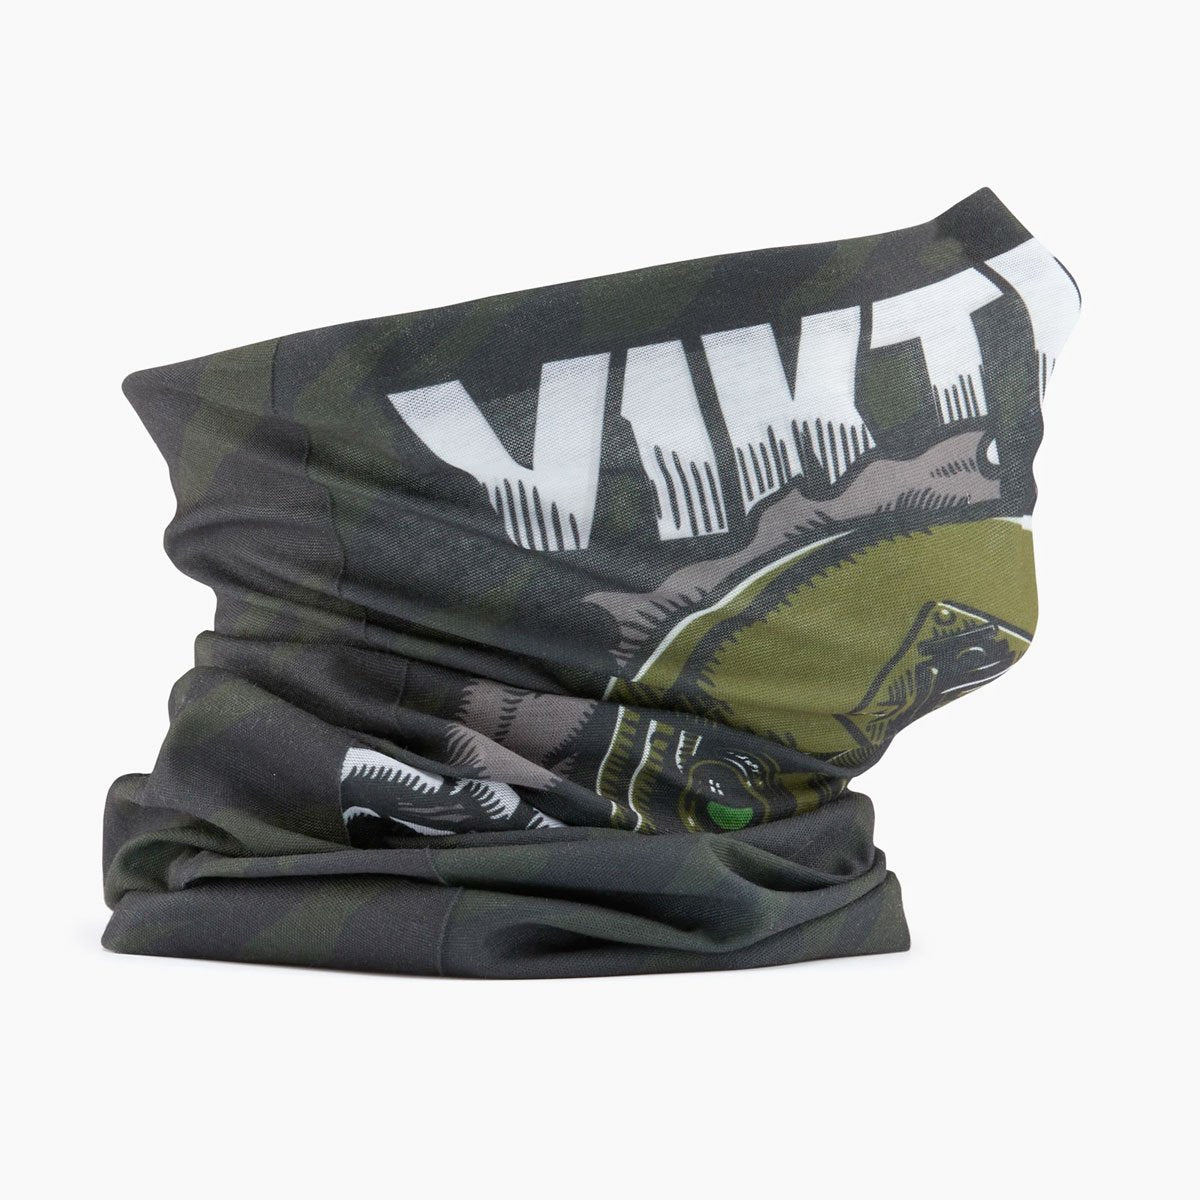 VIKTOS Adaptable Breacher Face Mask Nightfjall Accessories VIKTOS Tactical Gear Supplier Tactical Distributors Australia